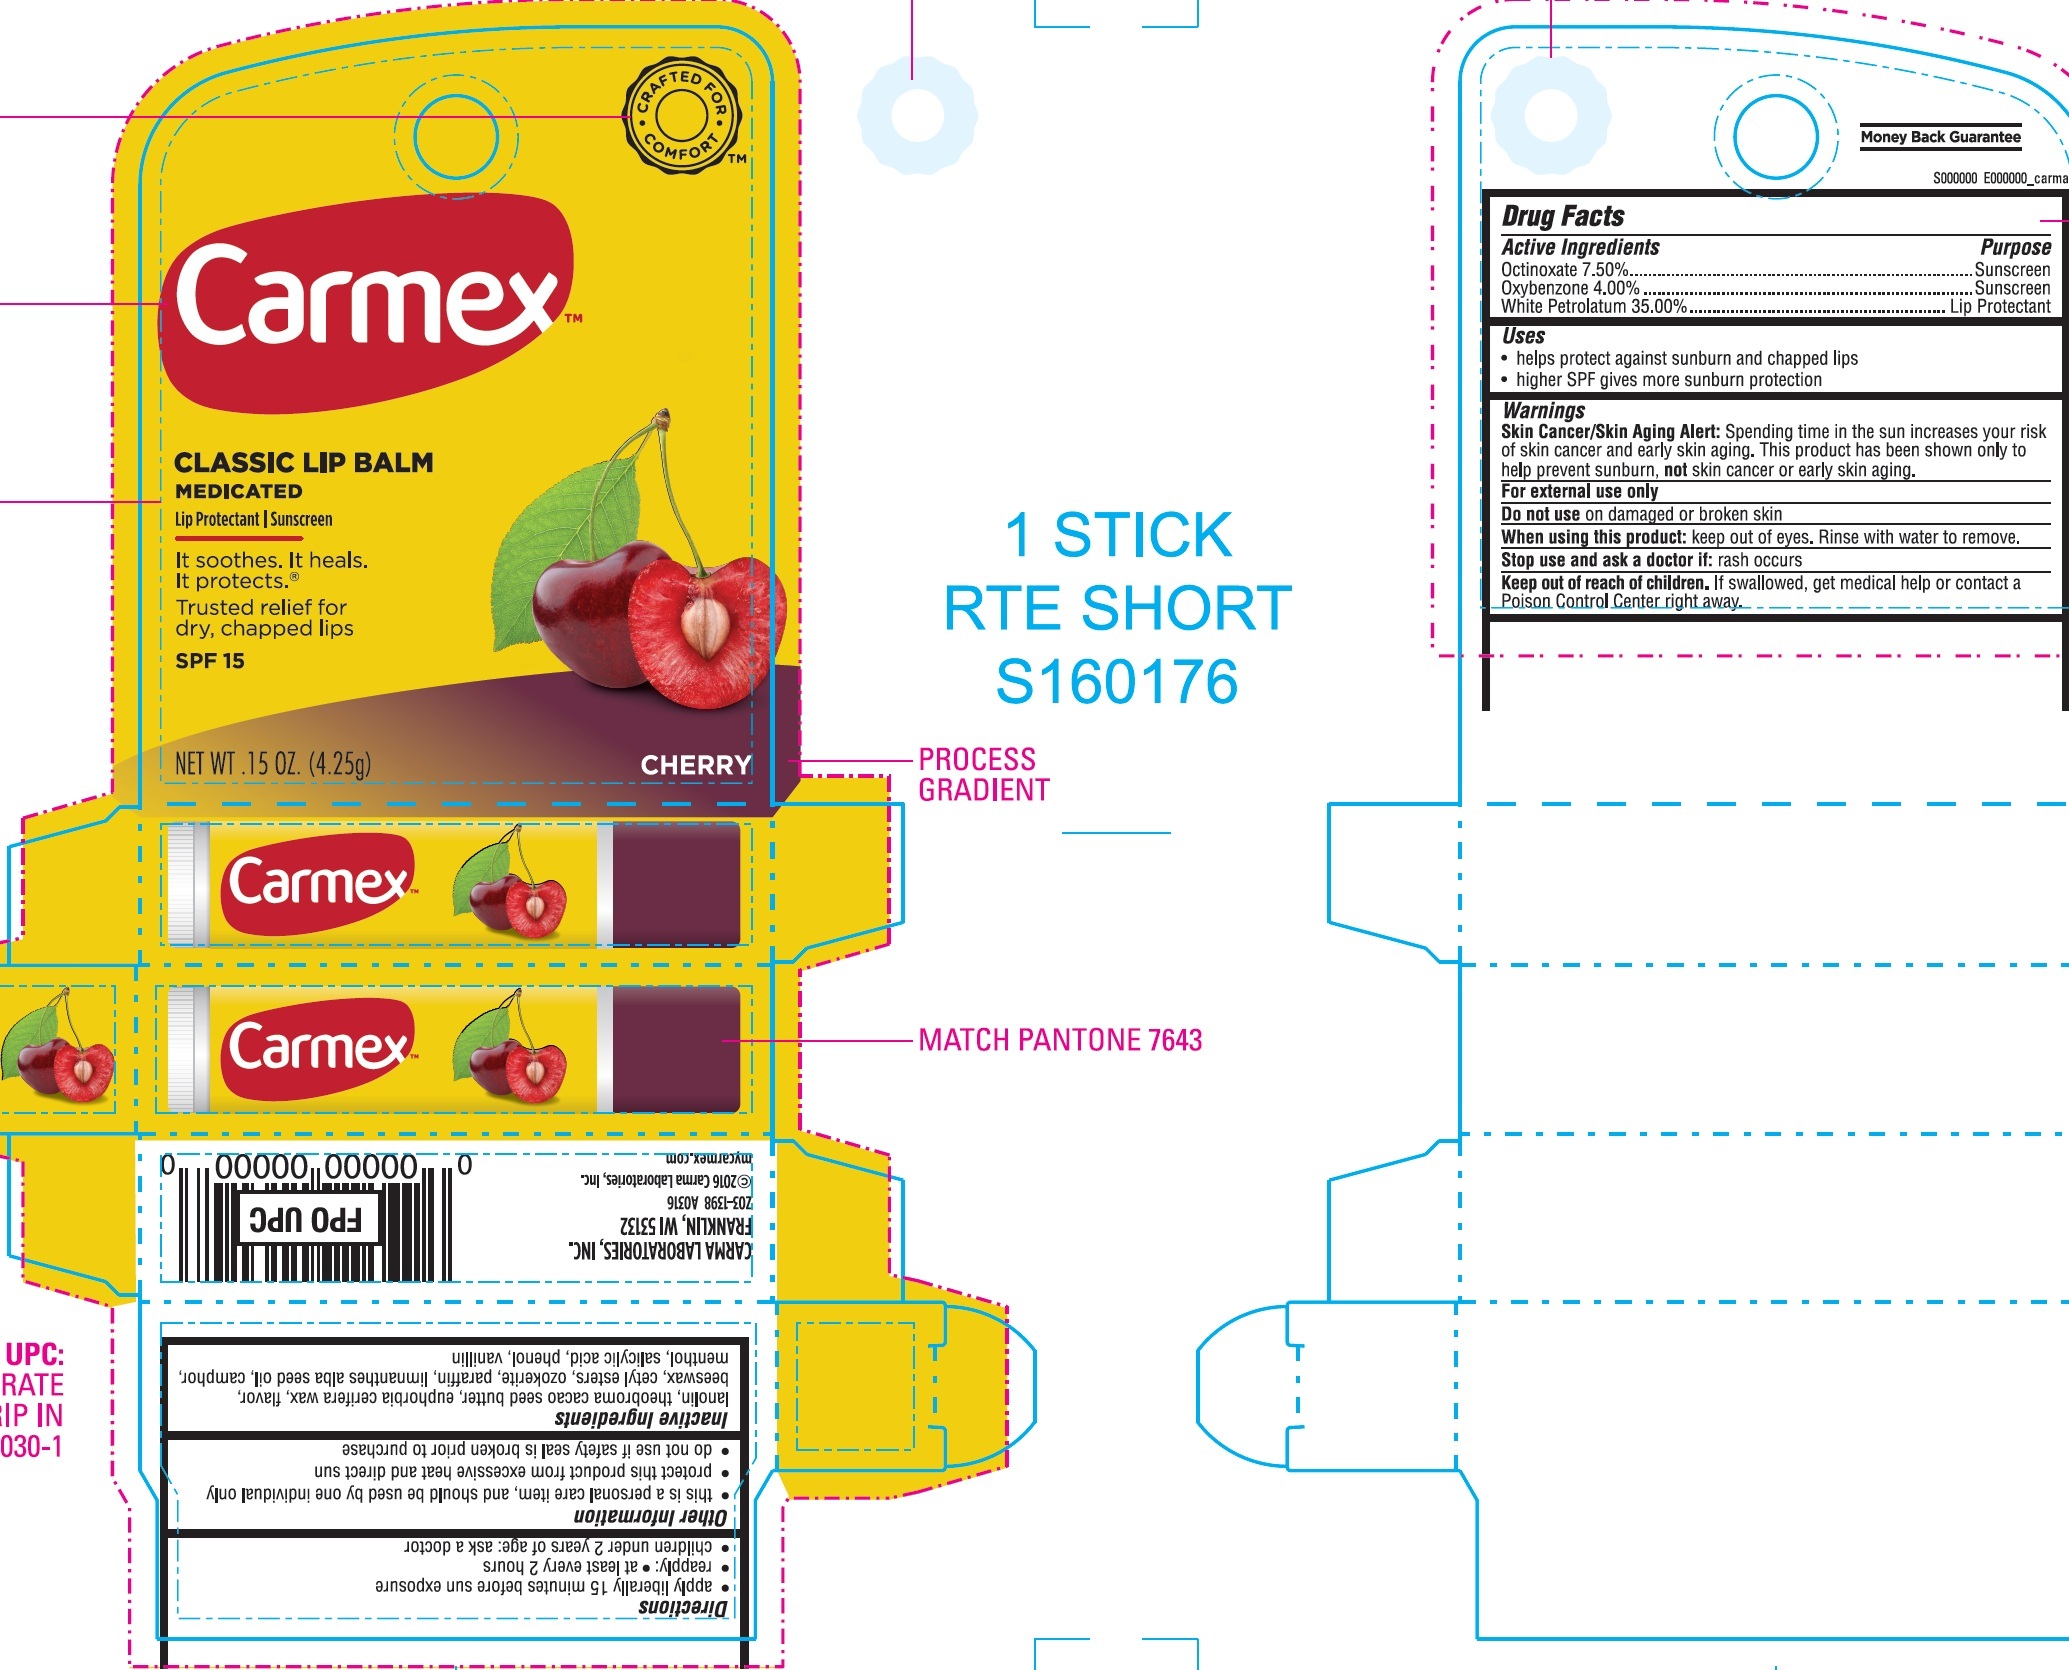 Carmex Classic Lip Balm Cherry Spf 15 | Octinoxate, Oxybenzone, Petrolatum Salve Breastfeeding